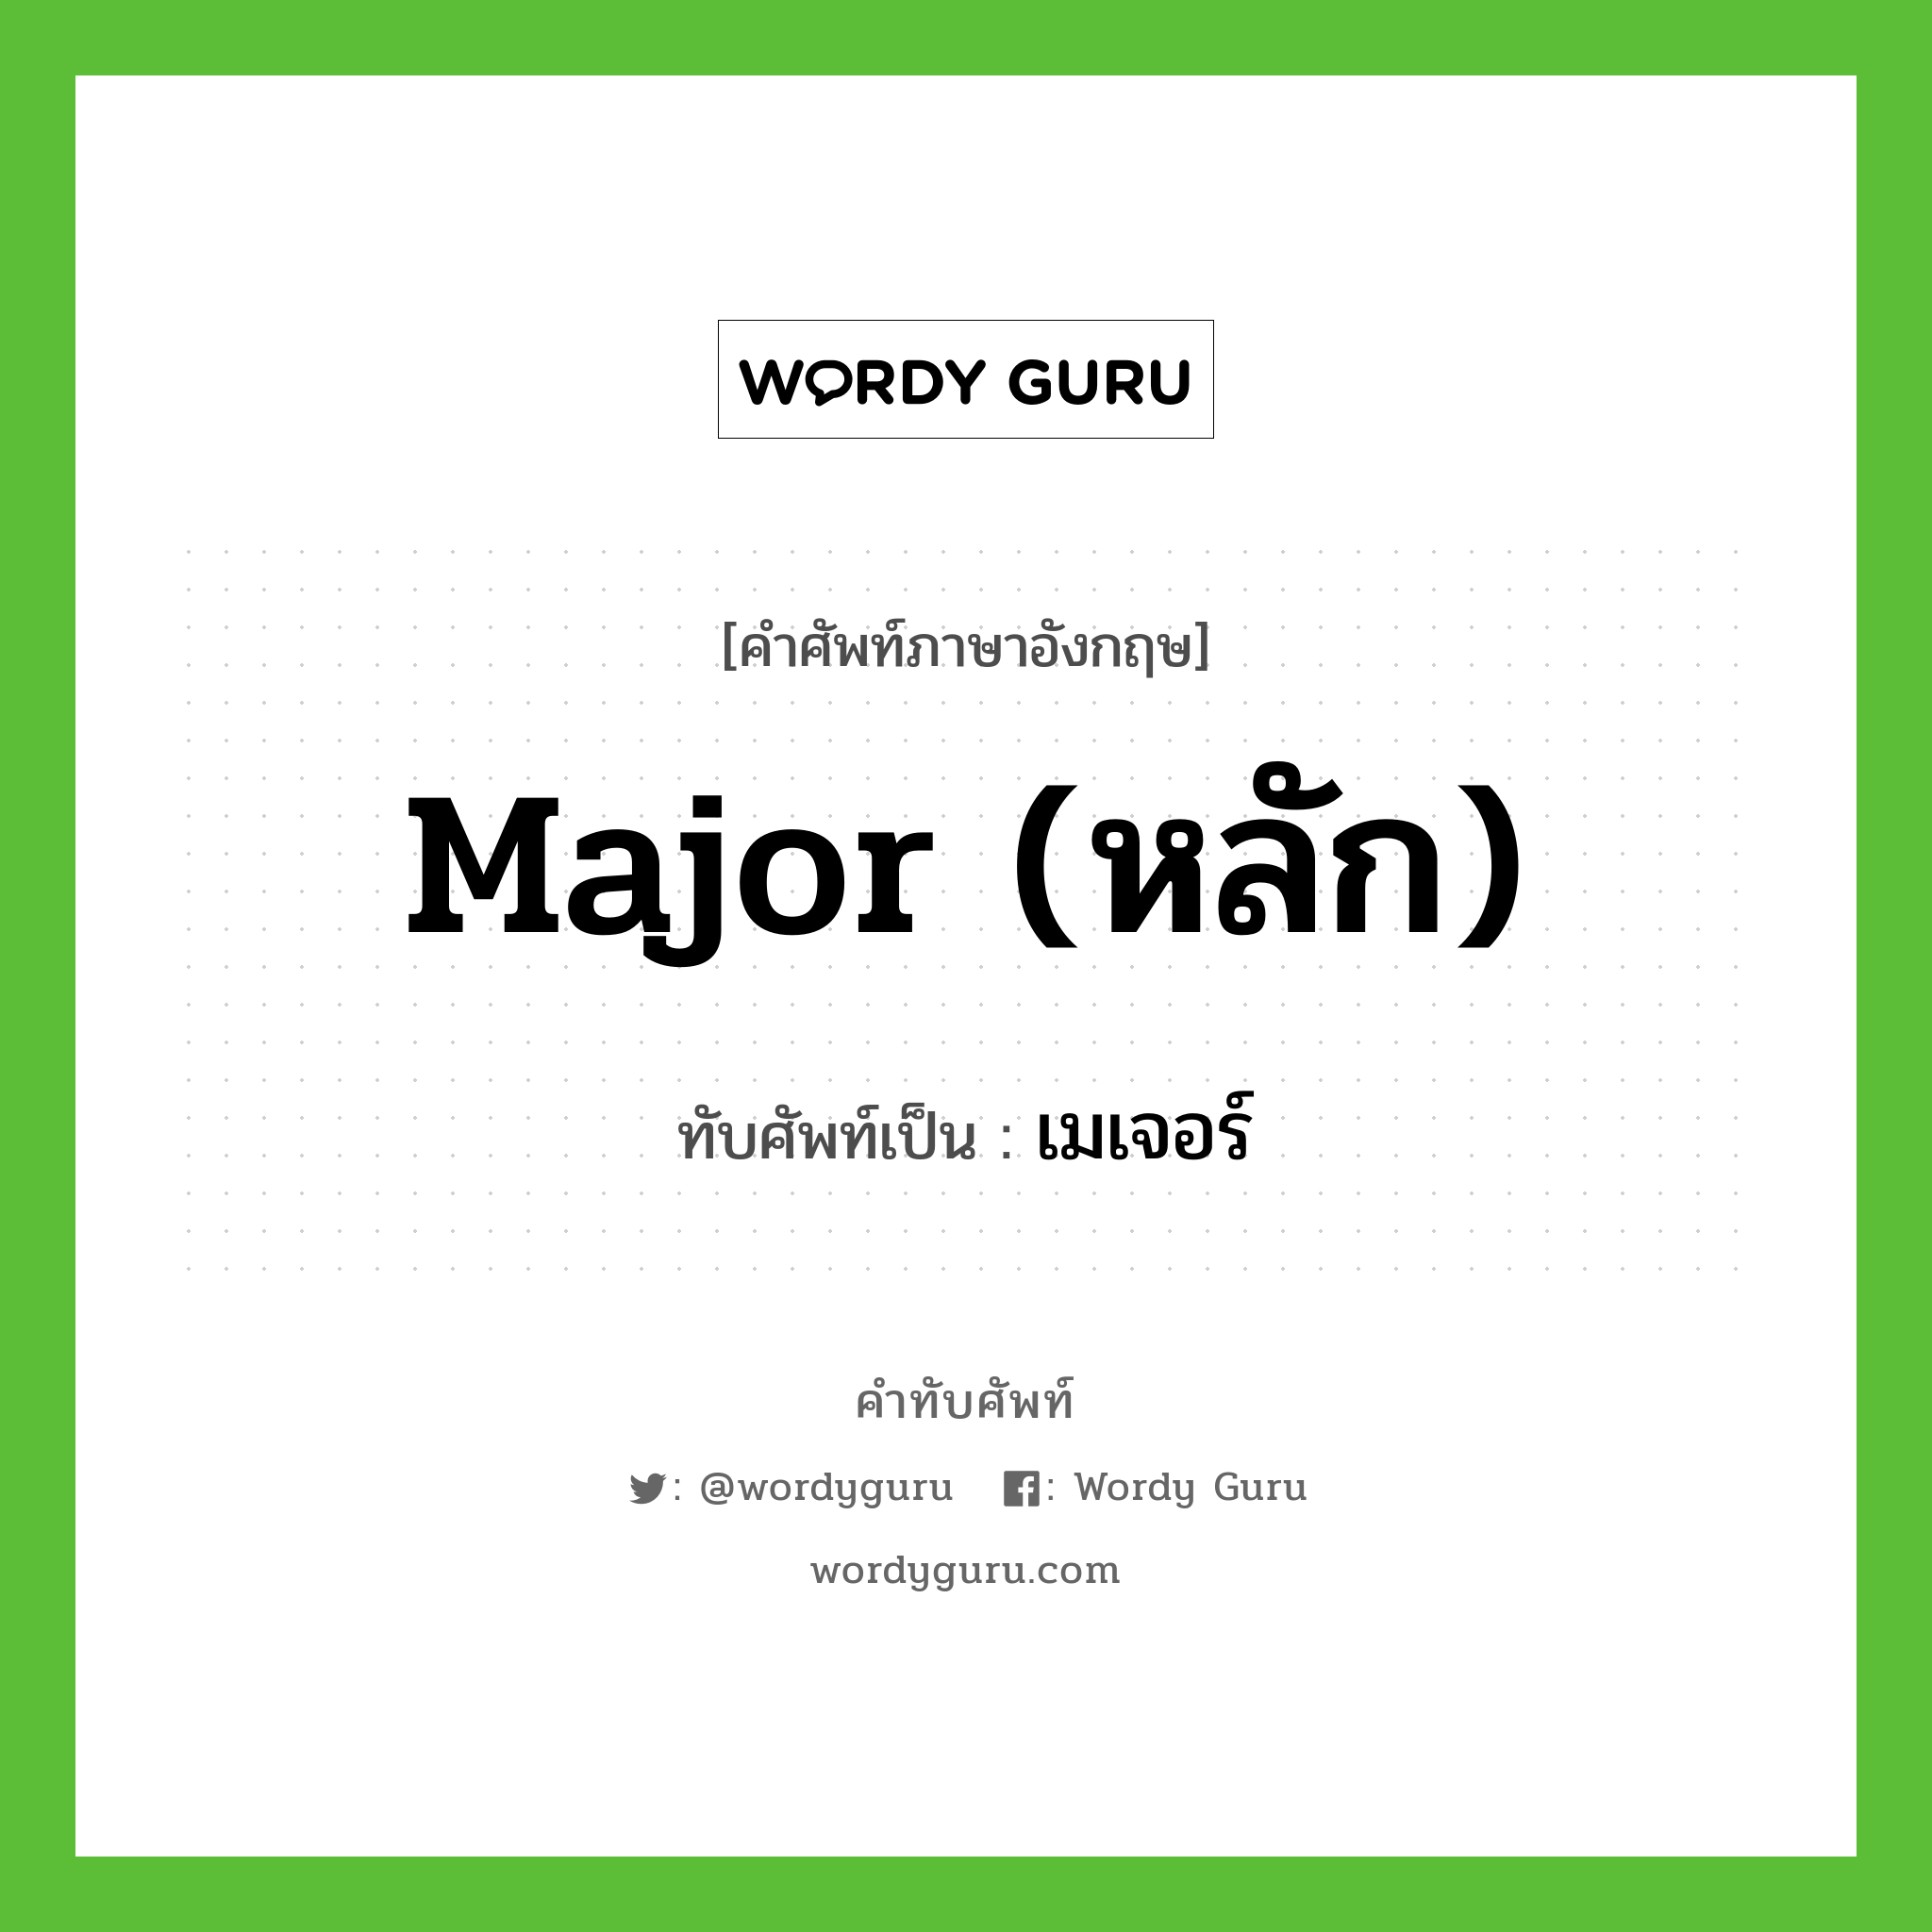 major (หลัก) เขียนเป็นคำไทยว่าอะไร?, คำศัพท์ภาษาอังกฤษ major (หลัก) ทับศัพท์เป็น เมเจอร์